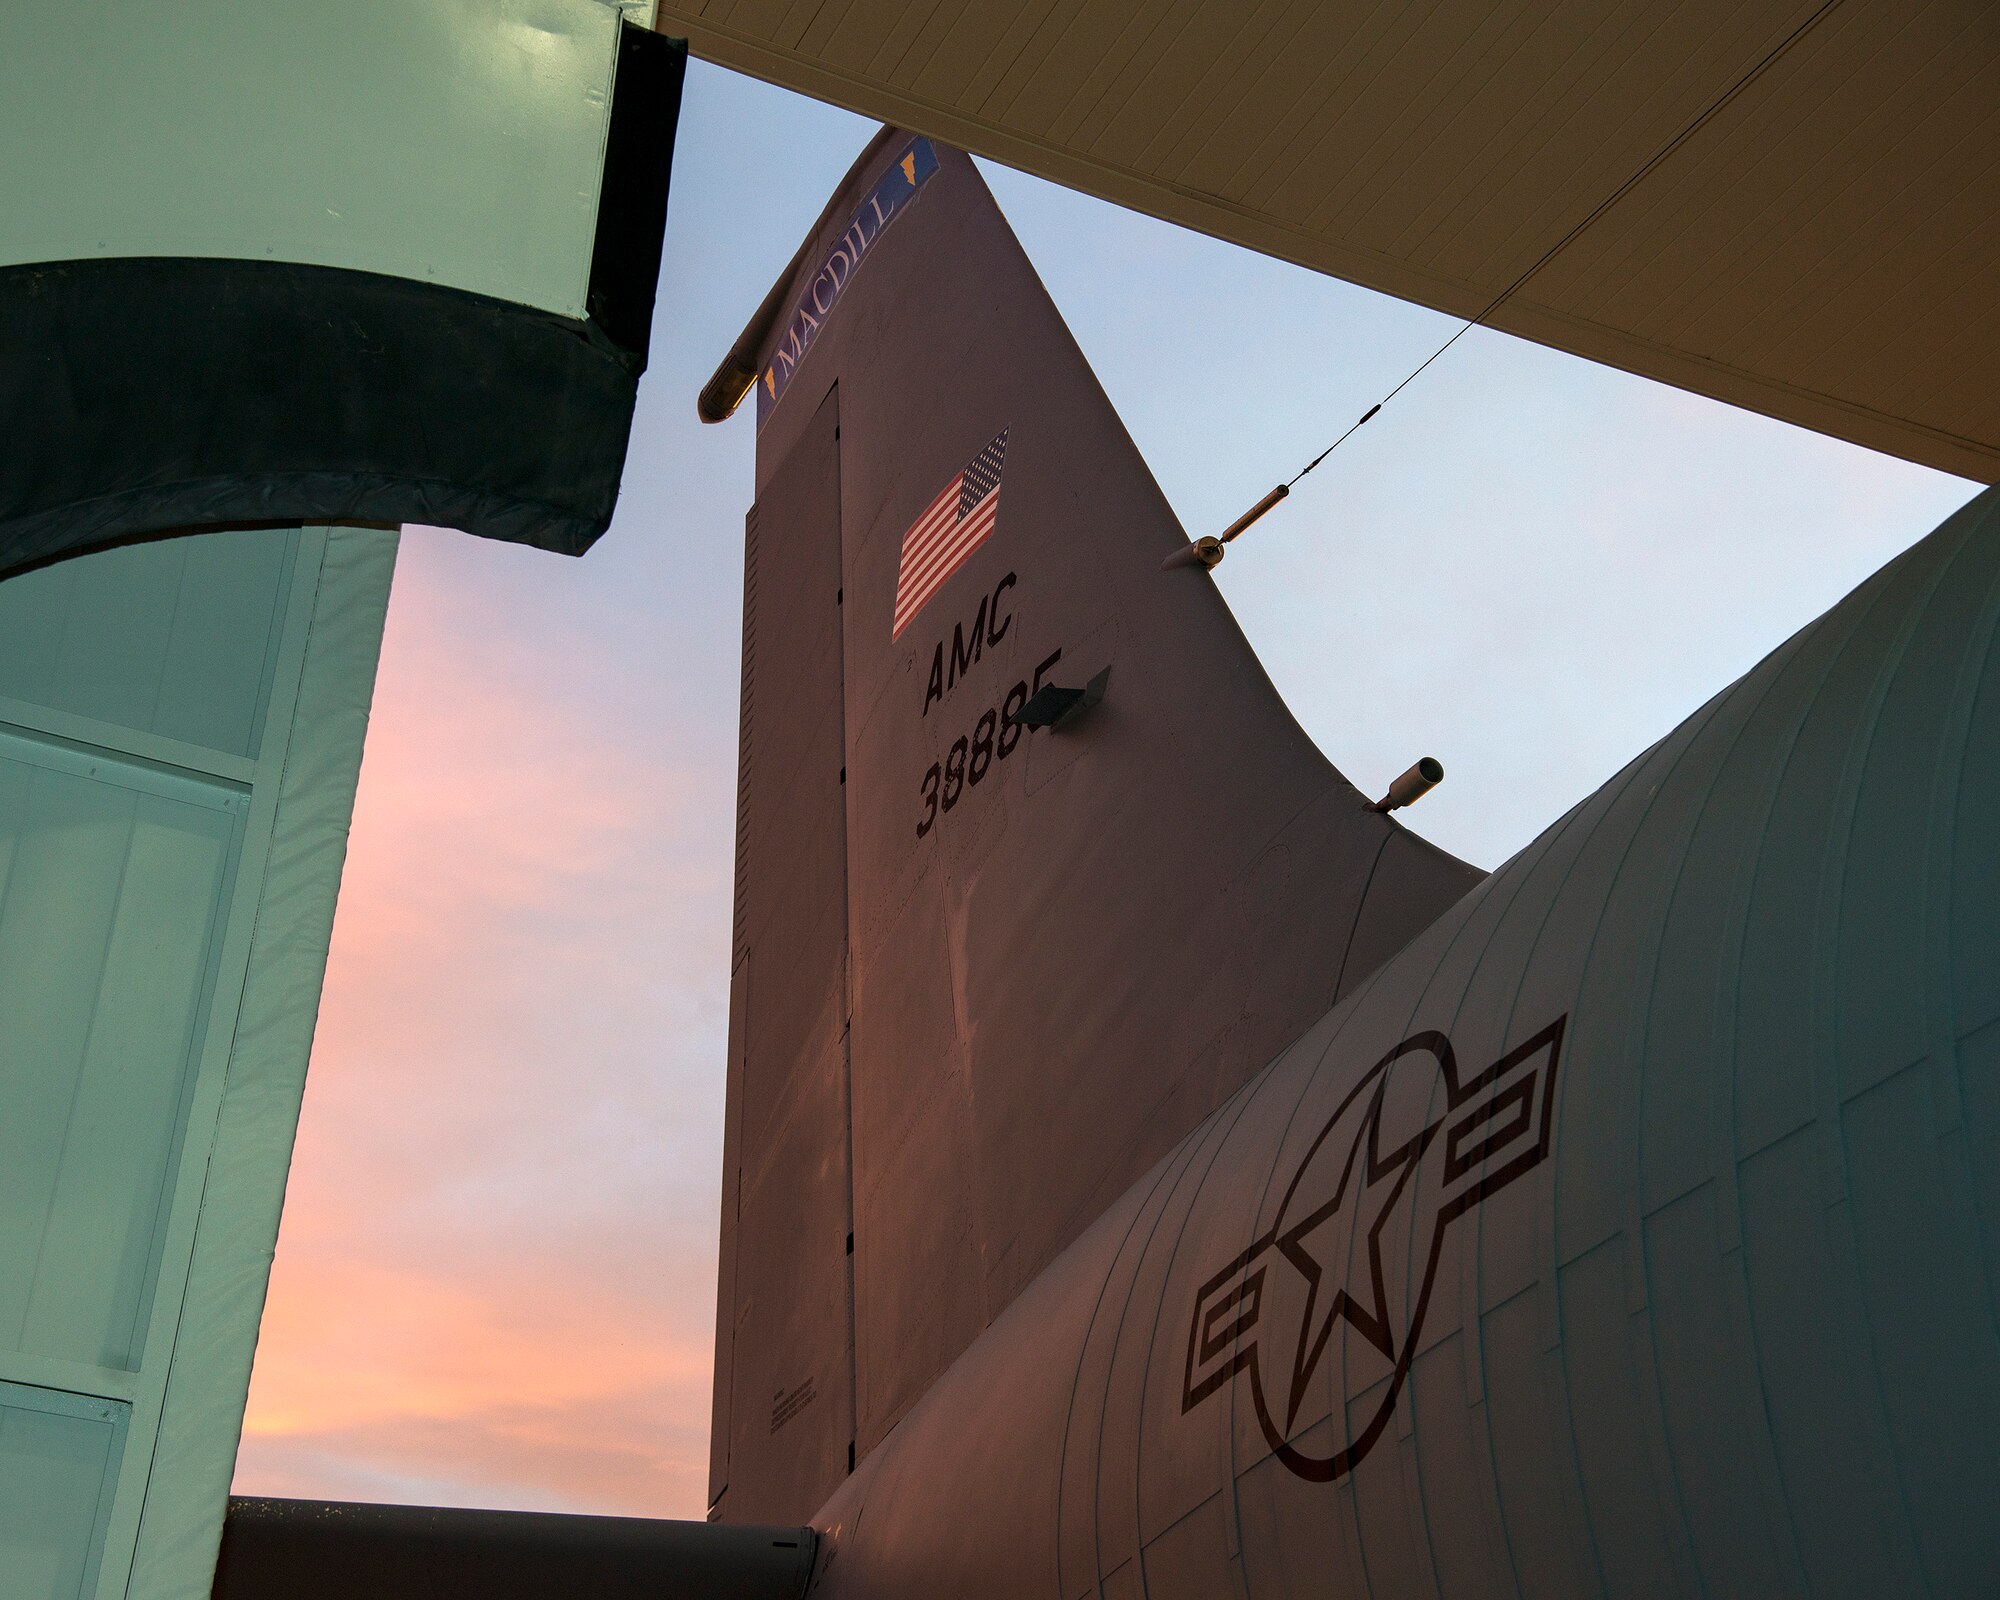 A KC-135 Stratotanker sits in the 6th Maintenance Squadron (MXS) hangar at MacDill Air Force Base, Fla., Nov. 25, 2019.